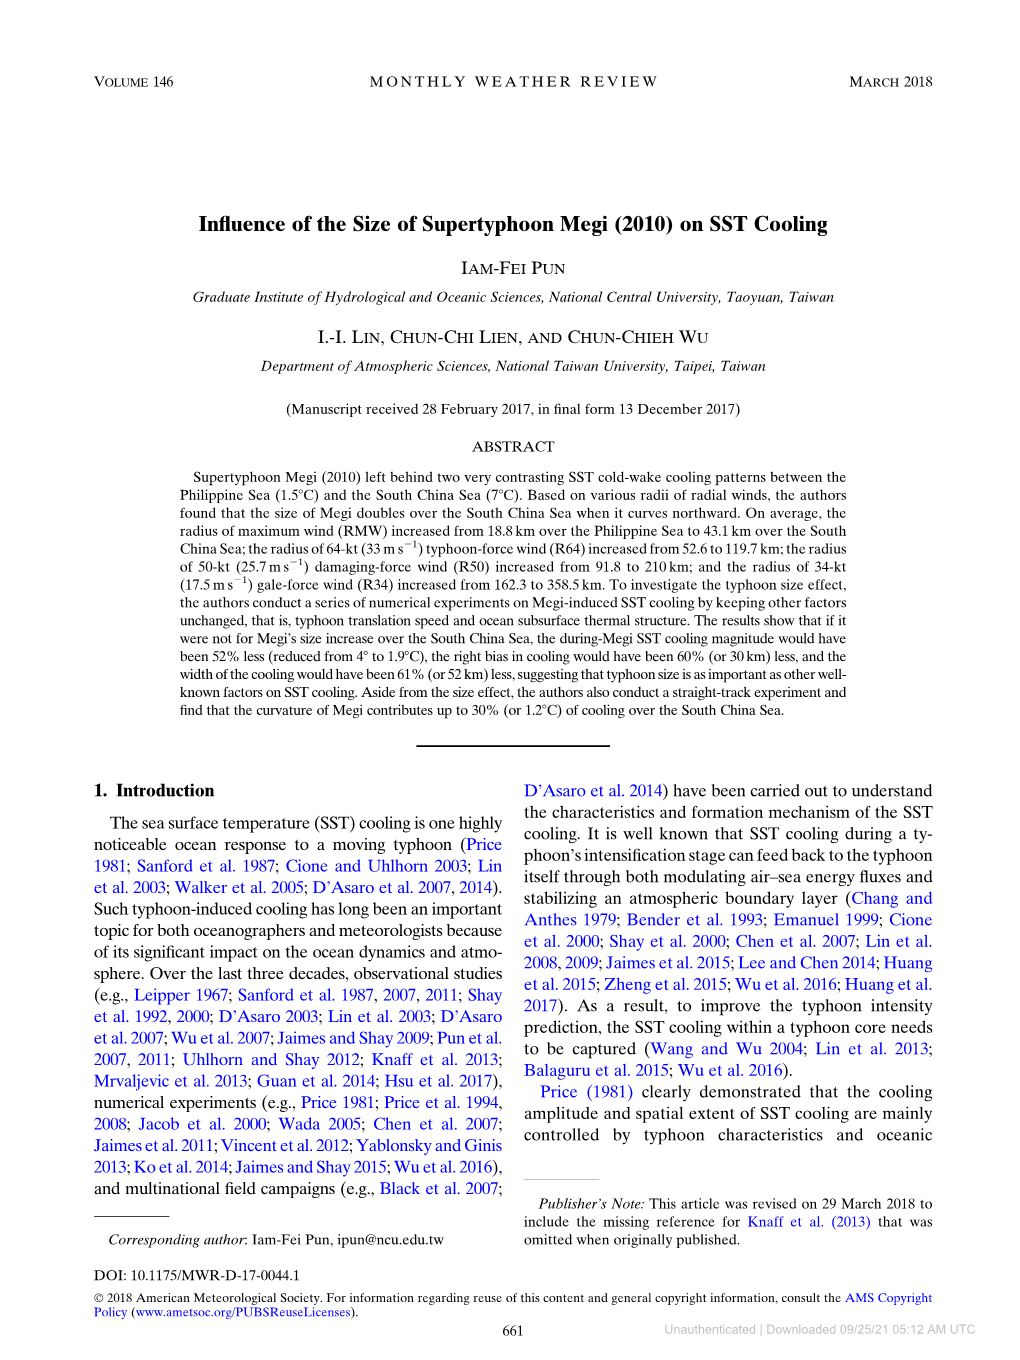 Influence of the Size of Supertyphoon Megi (2010) on SST Cooling